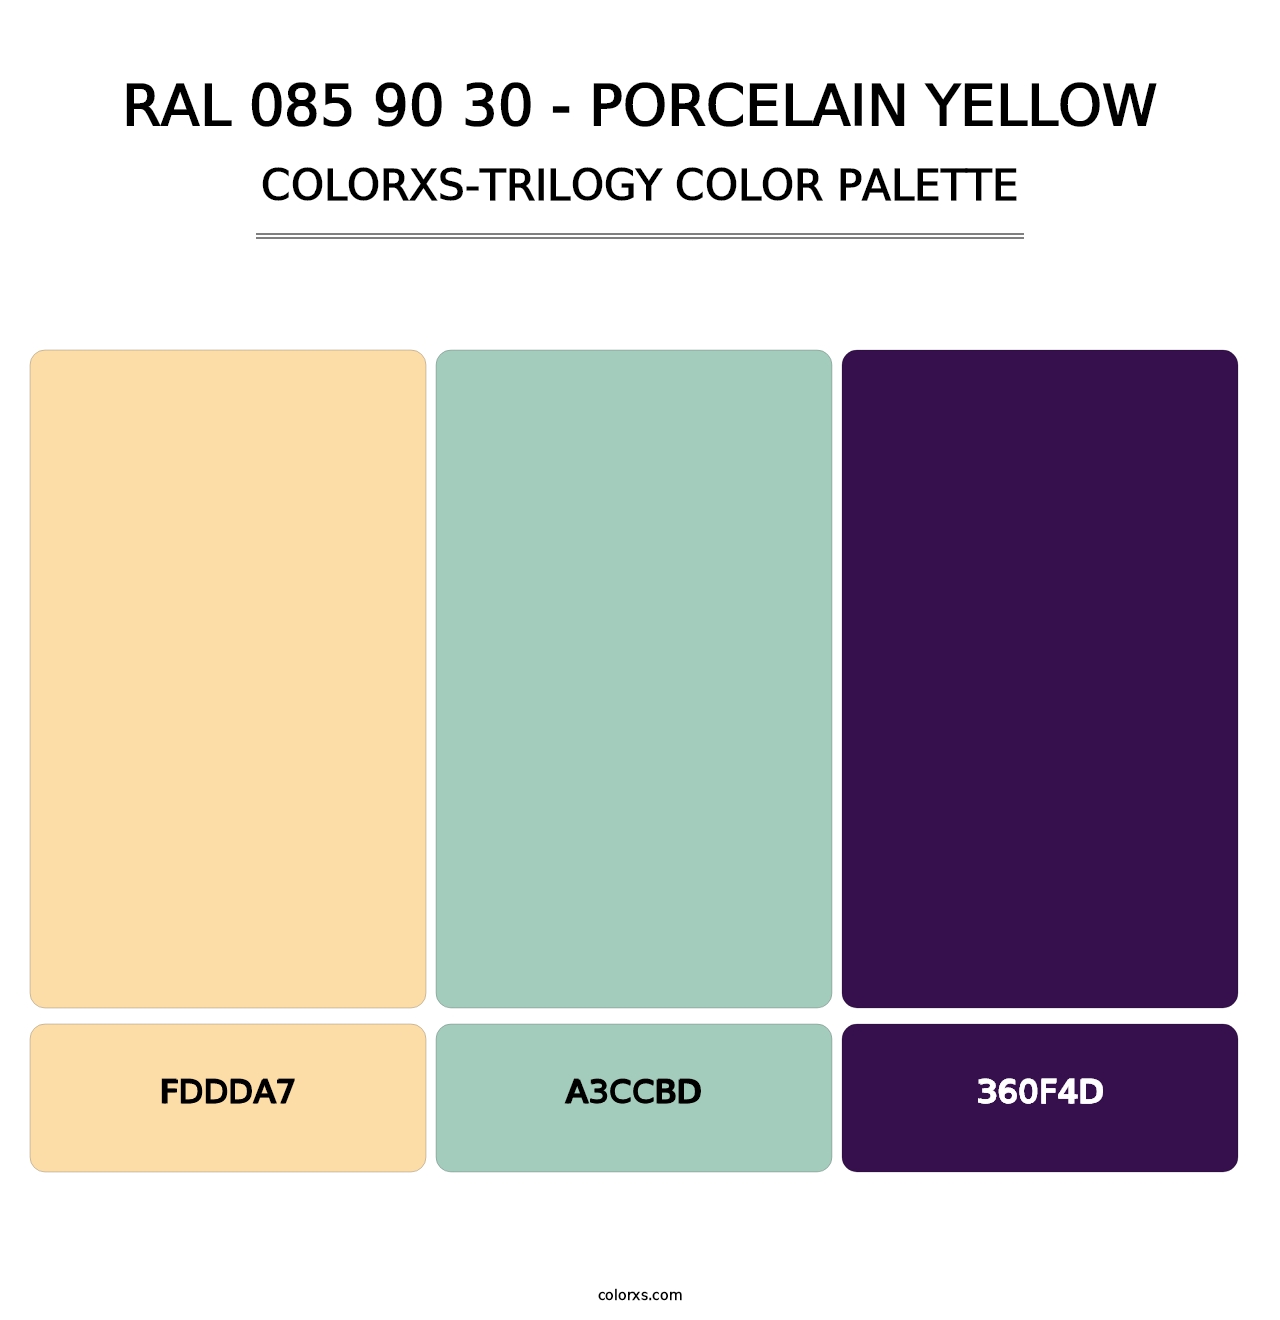 RAL 085 90 30 - Porcelain Yellow - Colorxs Trilogy Palette